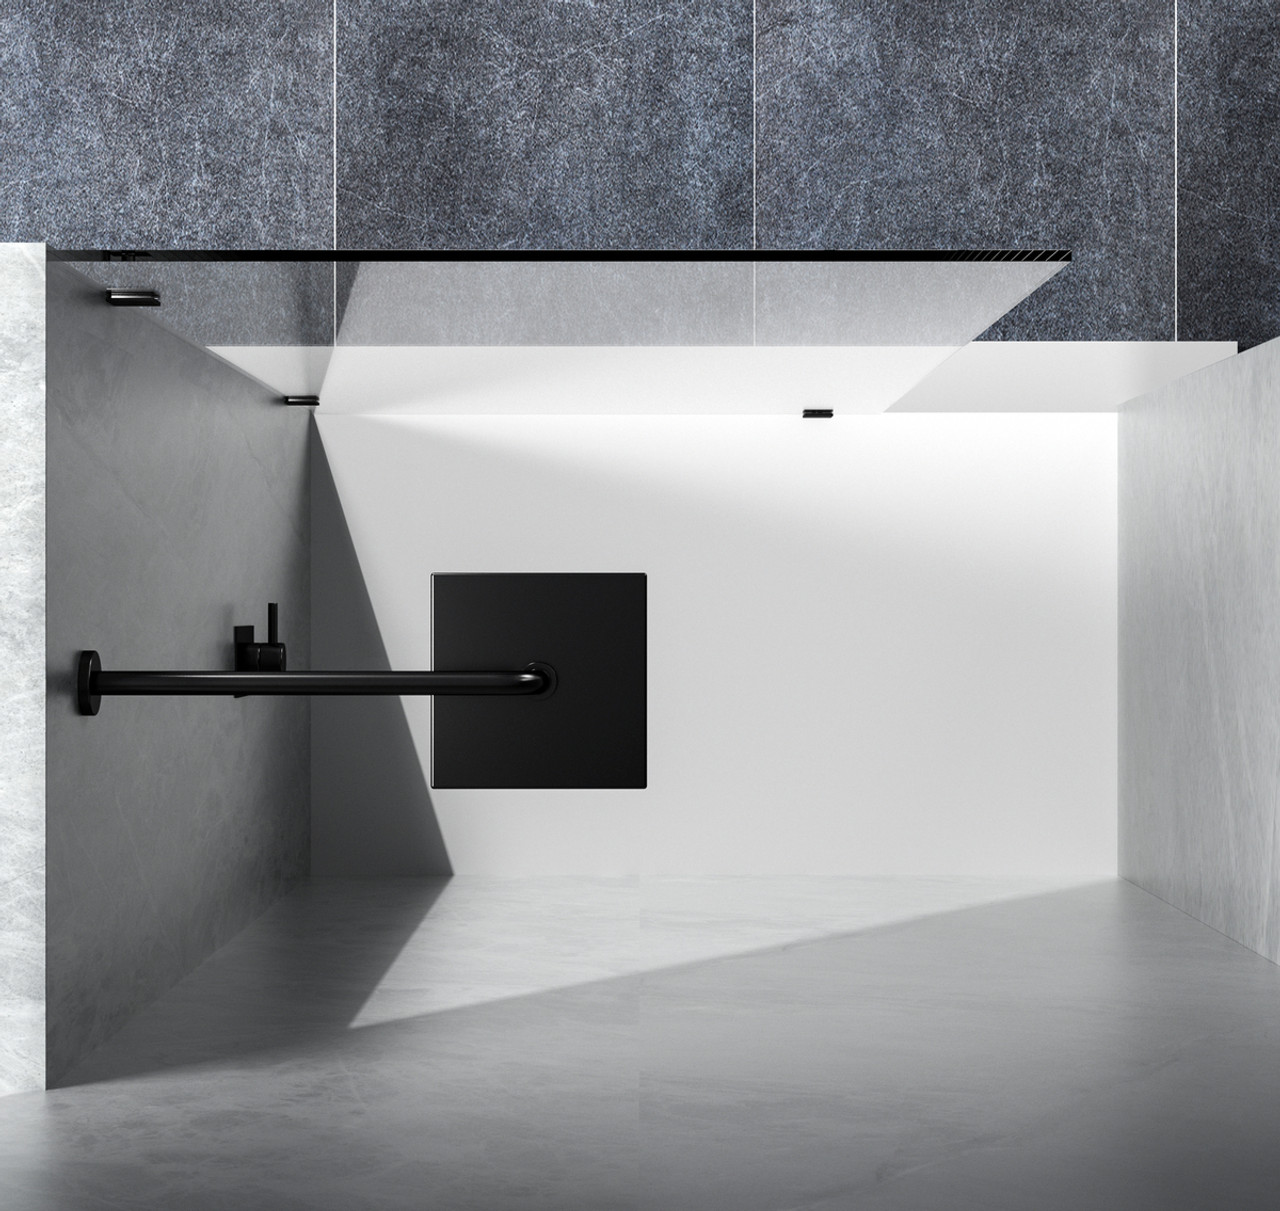 Elegant Kitchen and Bath SD155-3578MBK Fixed frameless shower door 35 x 78 Matte Black